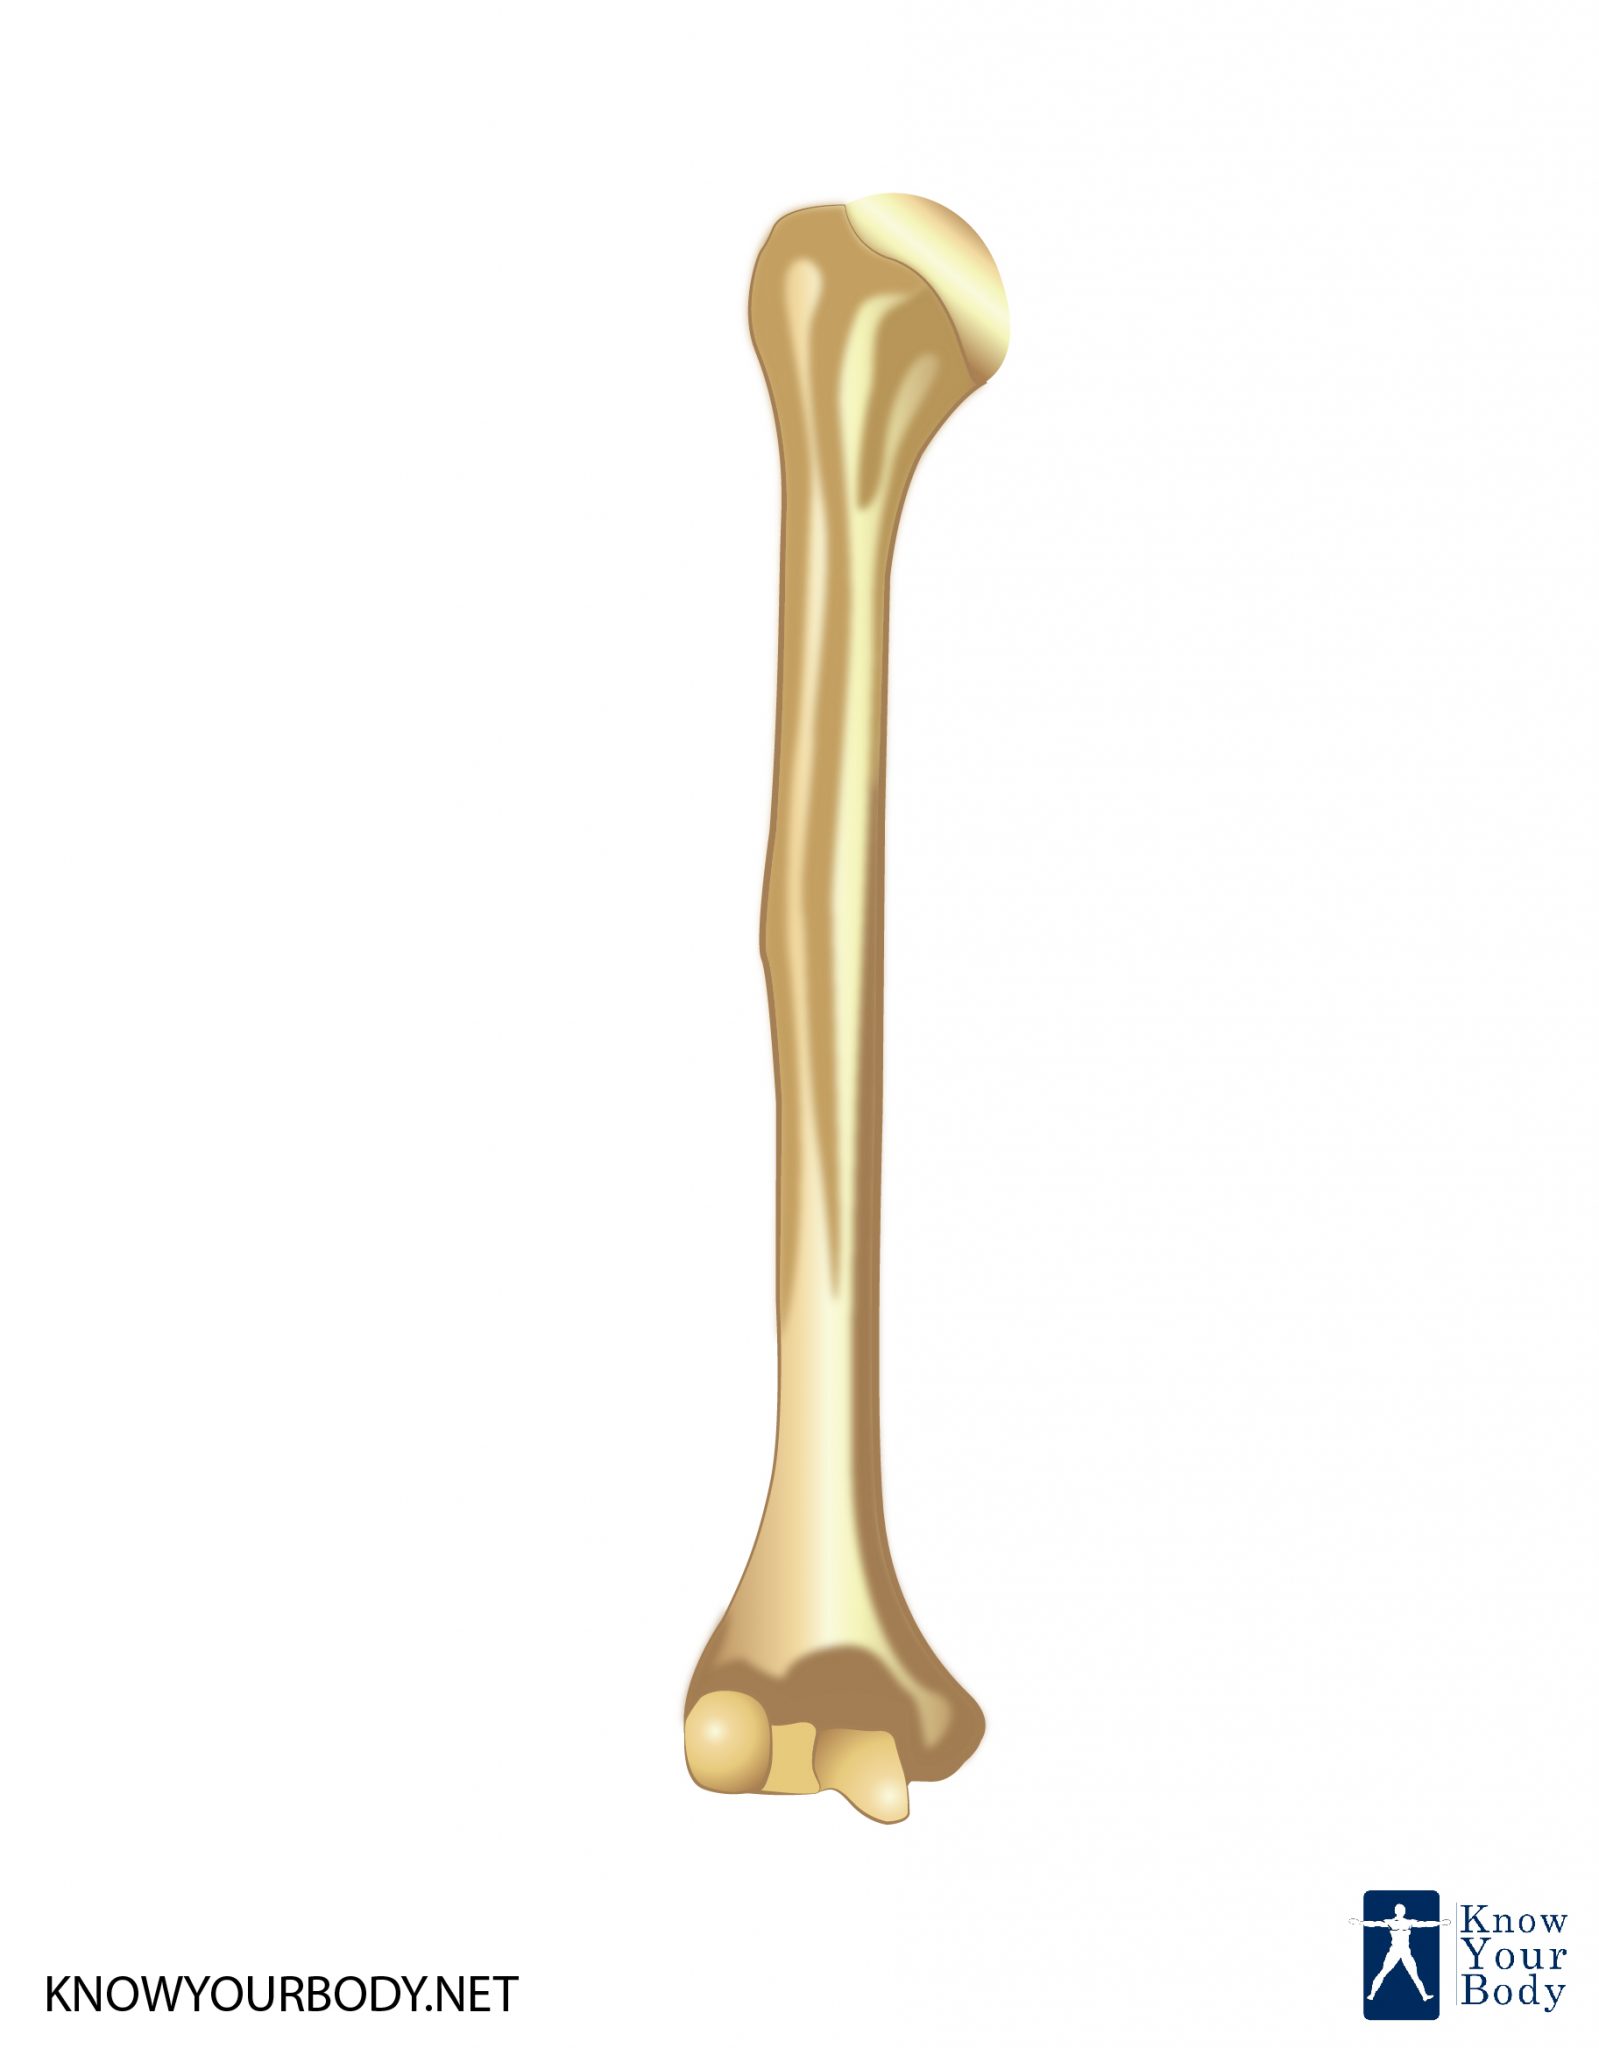 Humerus Bone - Anatomy, Location, Function and FAQs